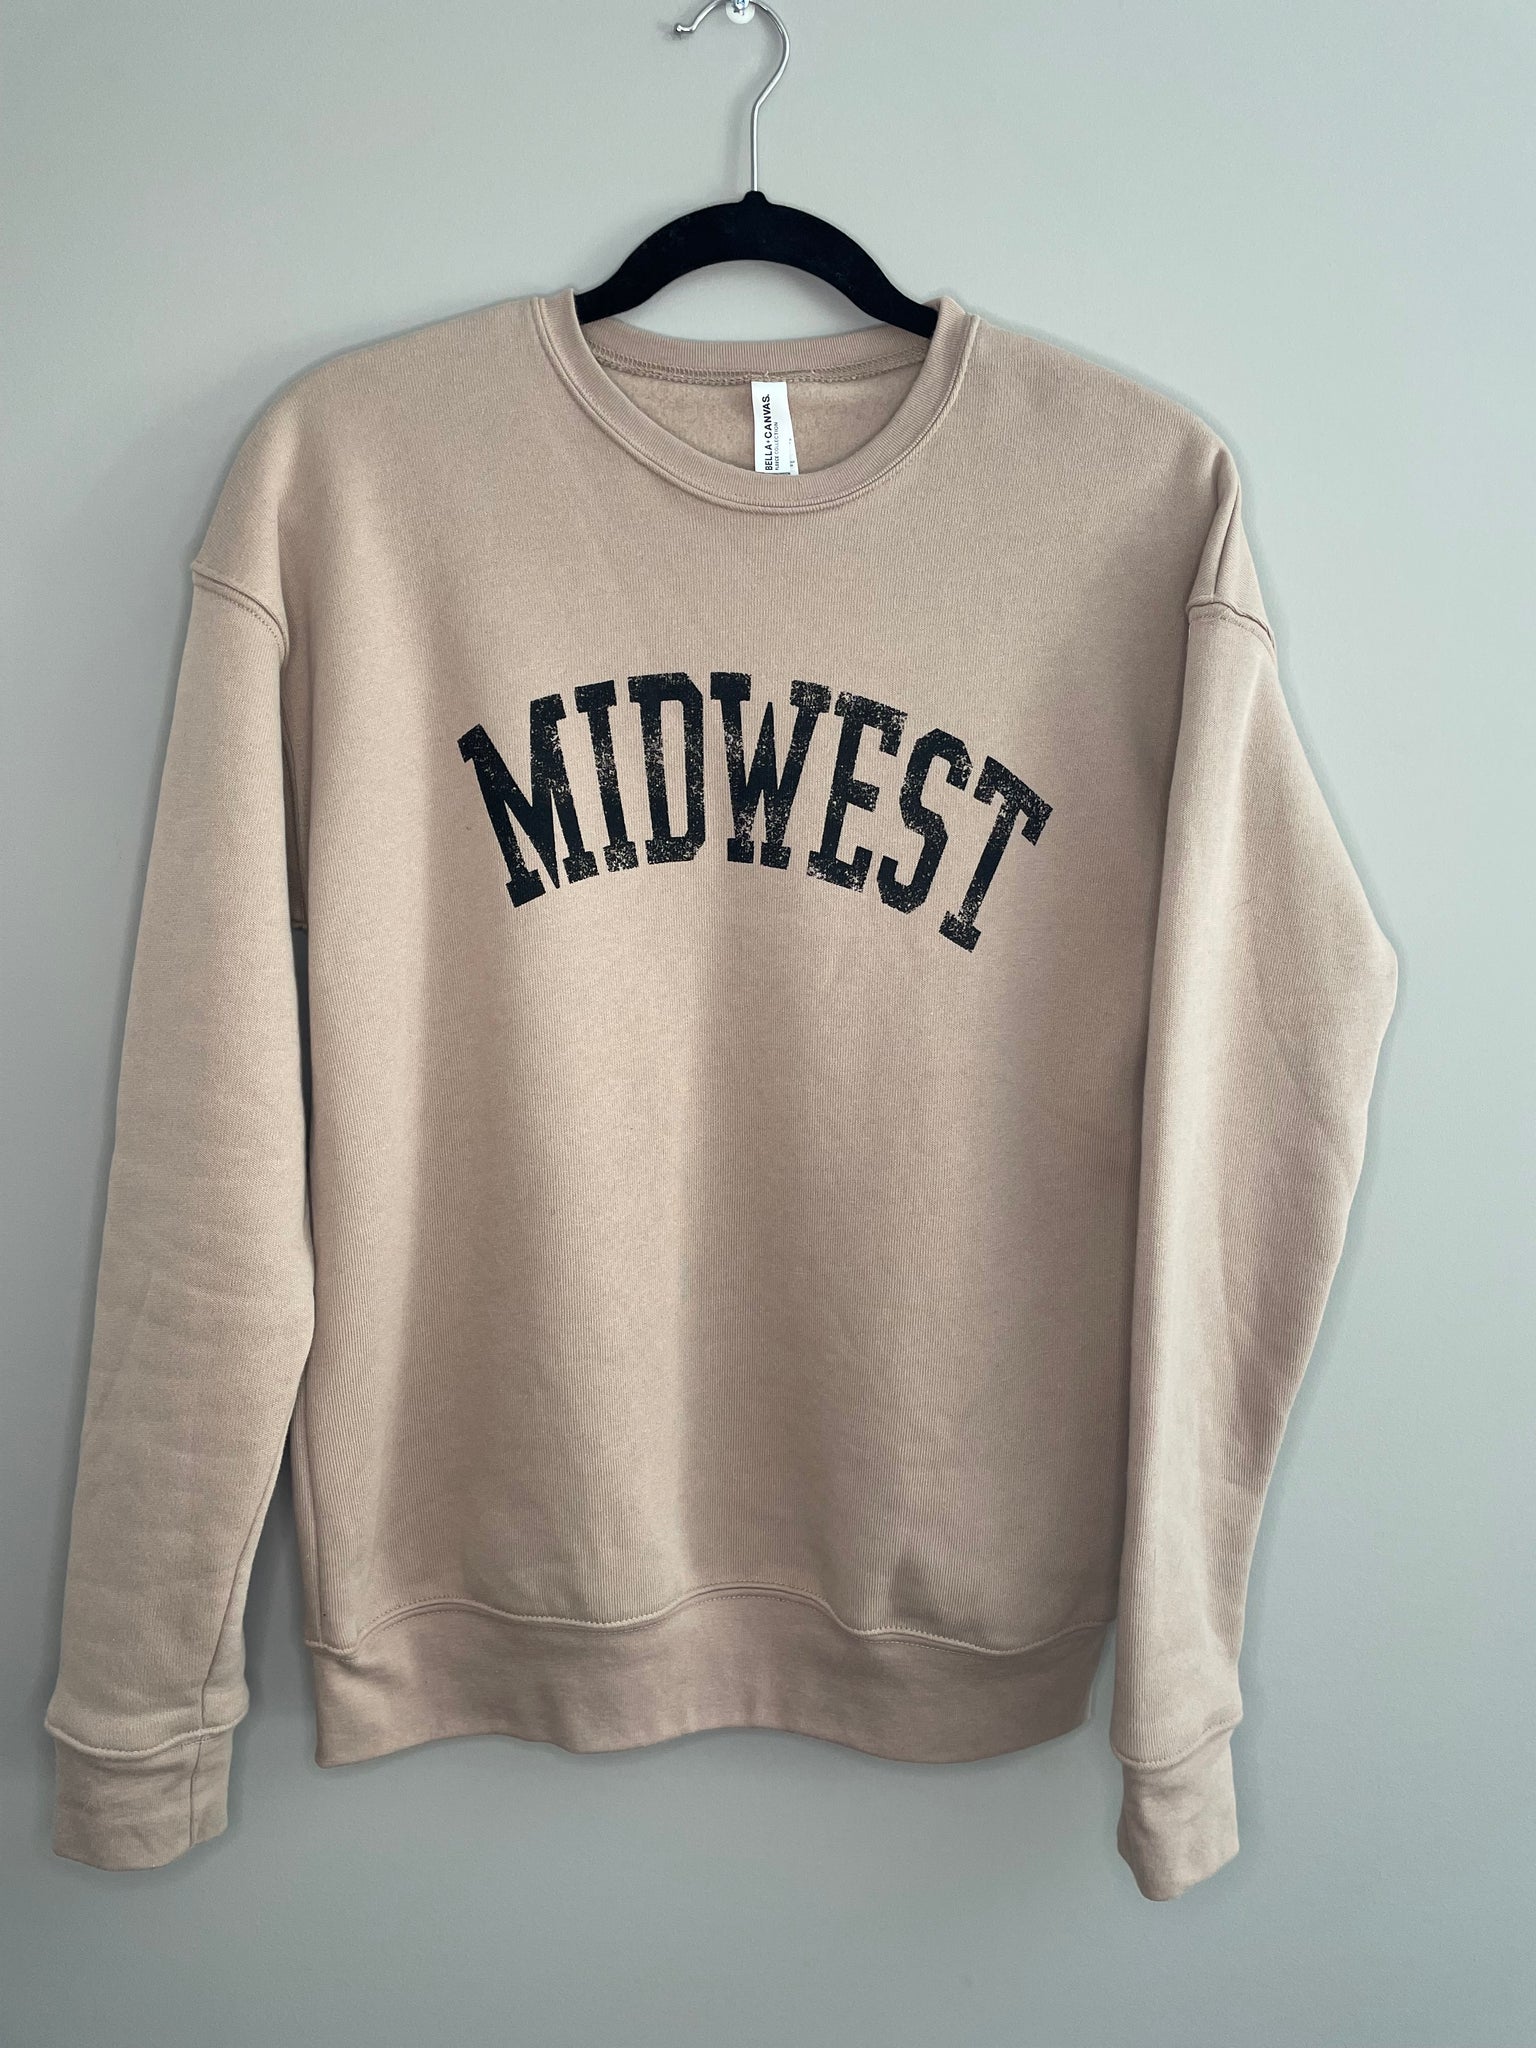 Midwest is Best Sweatshirt